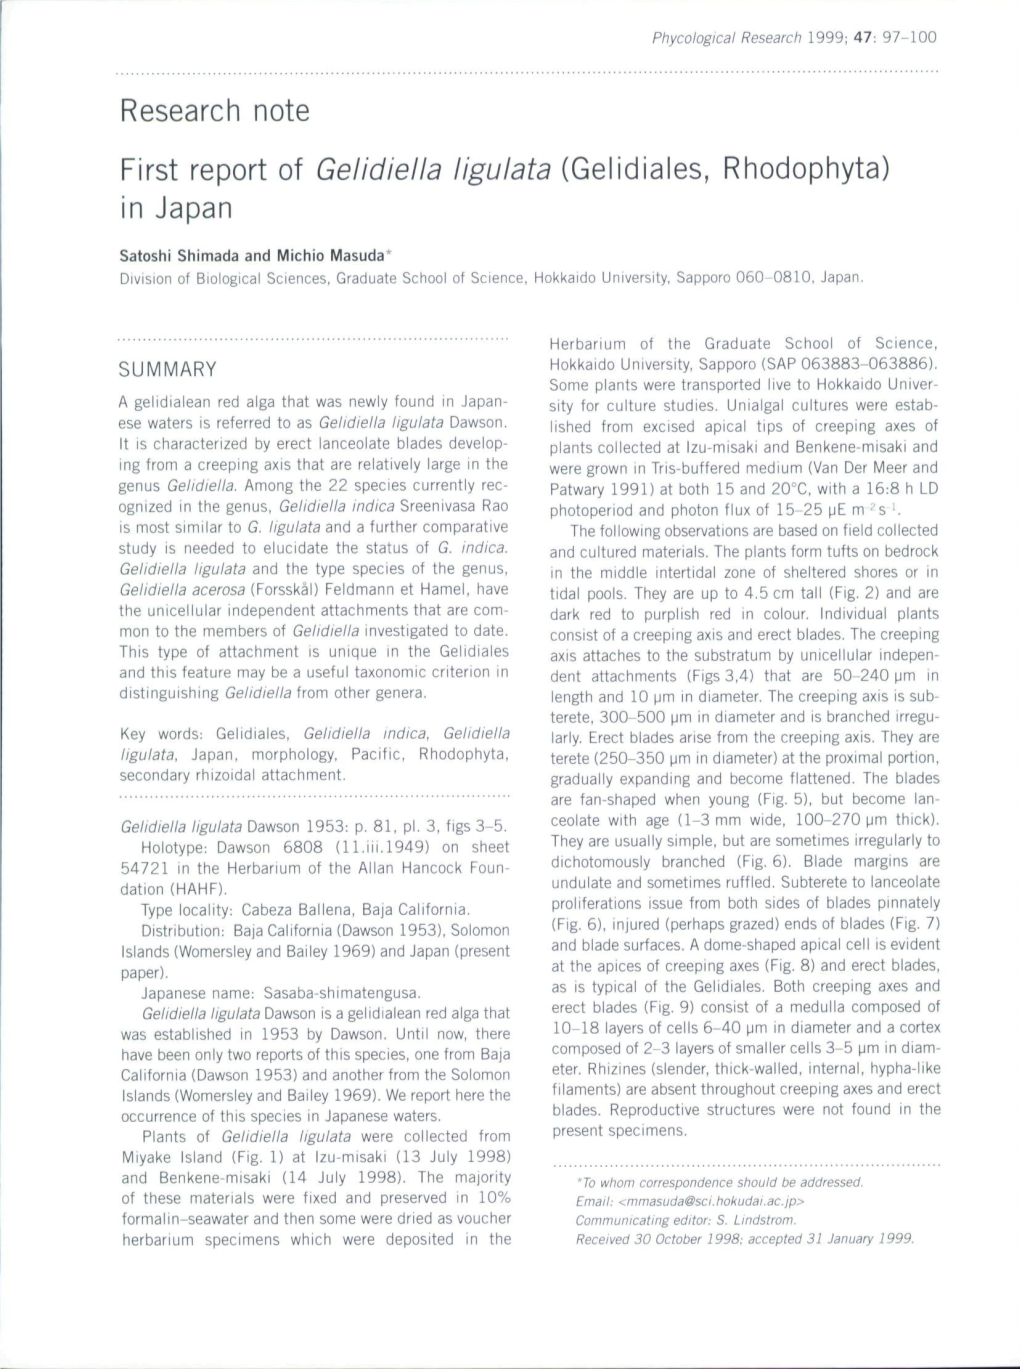 Research Note First Report of Gelidlella Ligulata (Gelidiales, Rhodophyta) in Japan